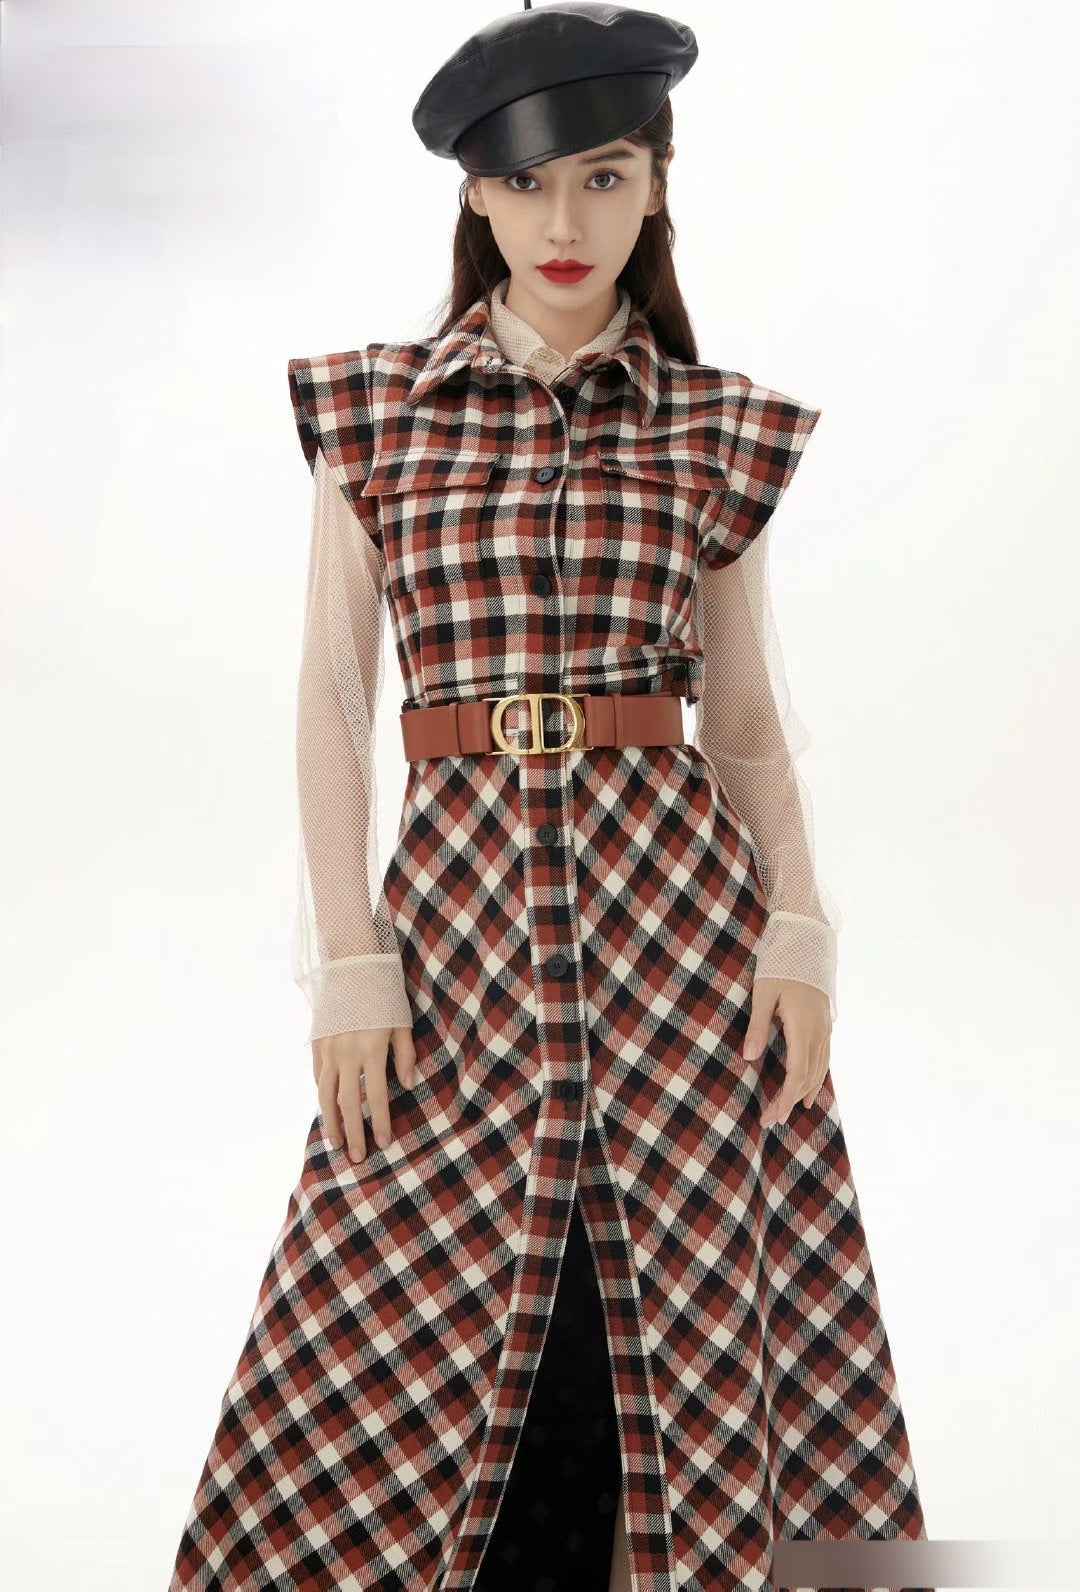 Blackpink Jisoo Inspired Plaid Dress With Collar